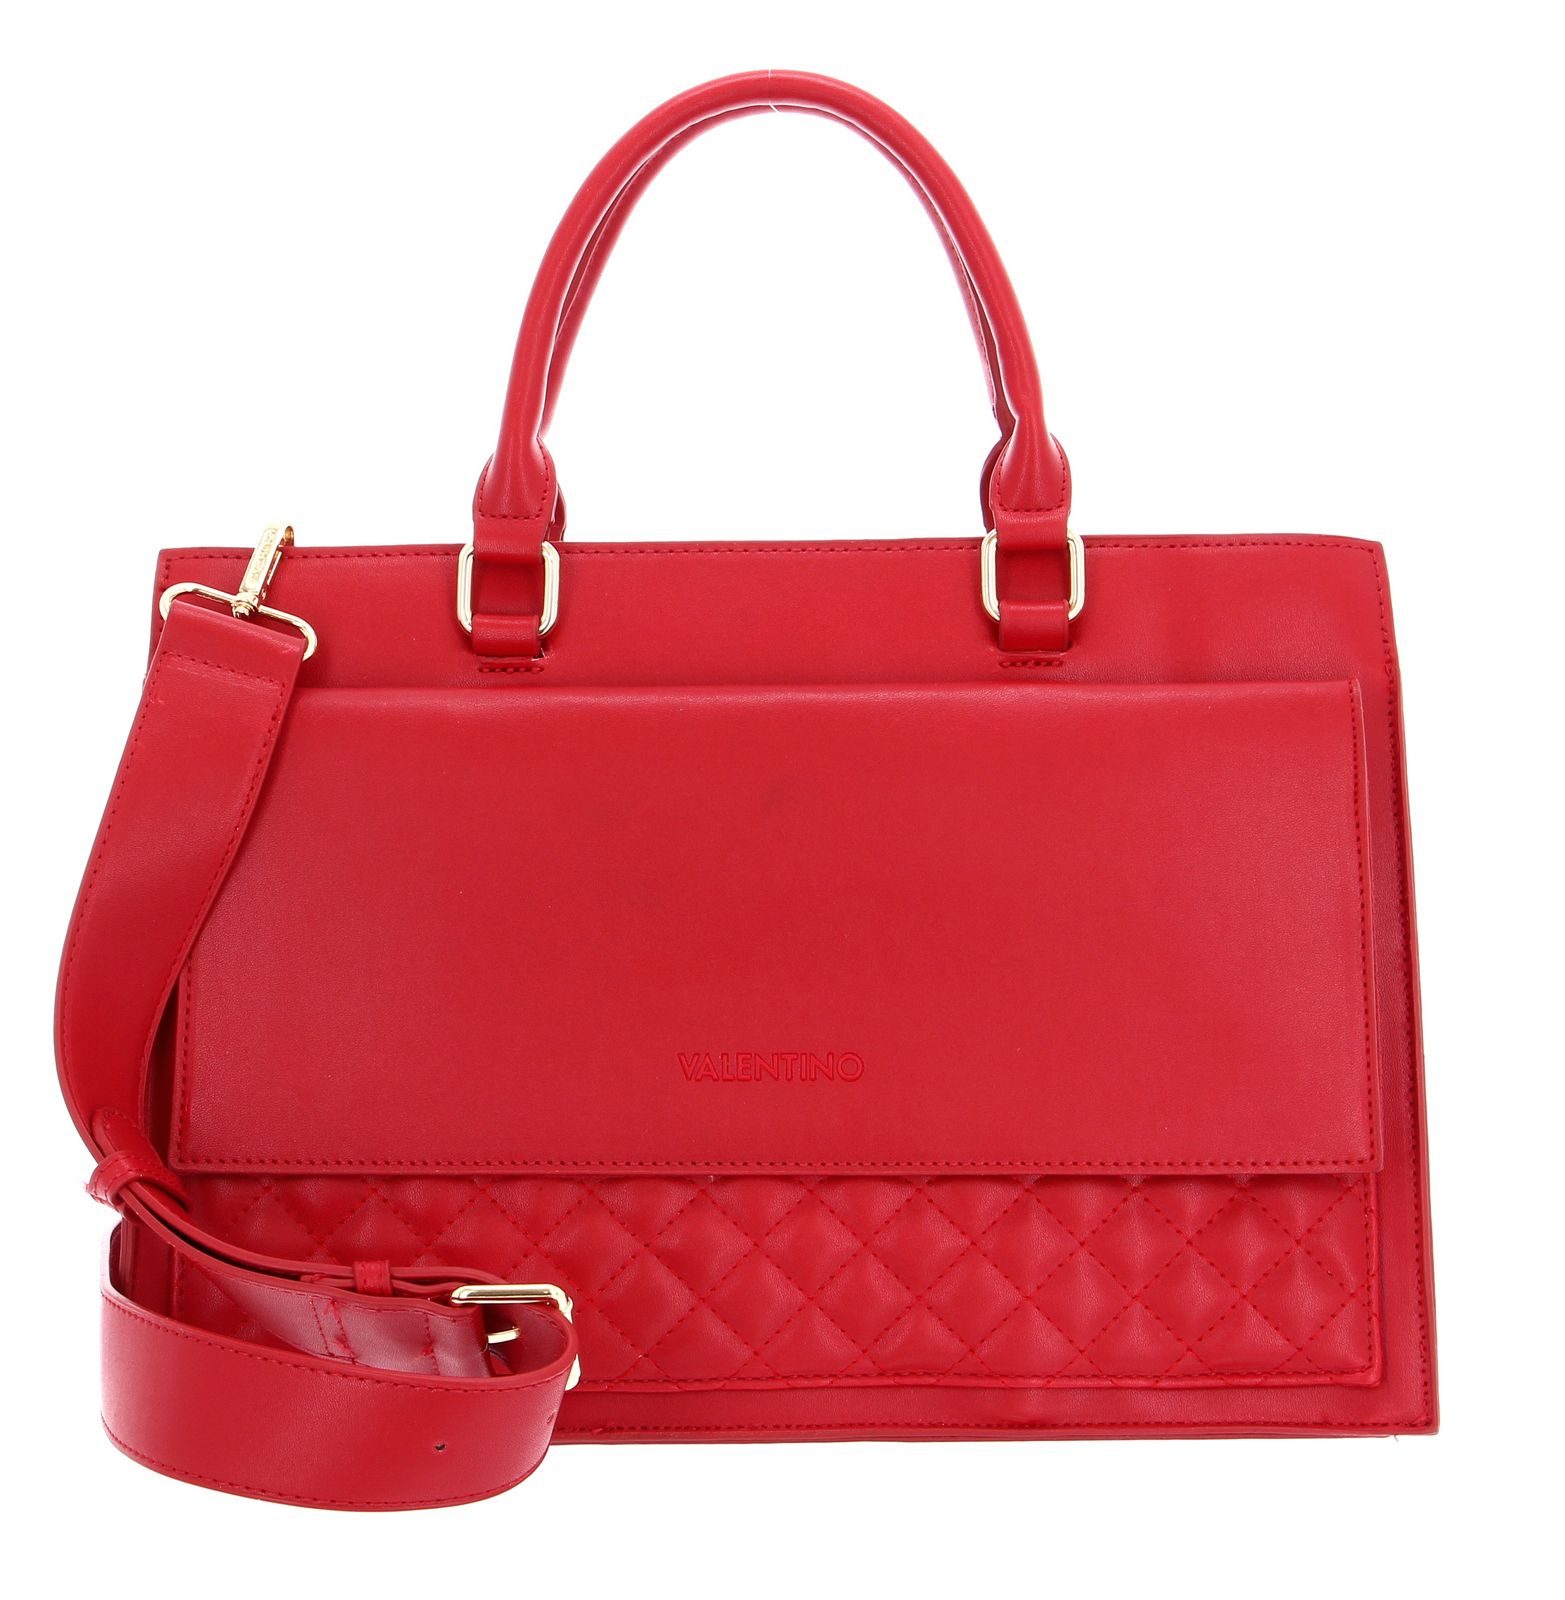 Guess Handbags - love them! | Stylish handbags, Purses and handbags, Purses